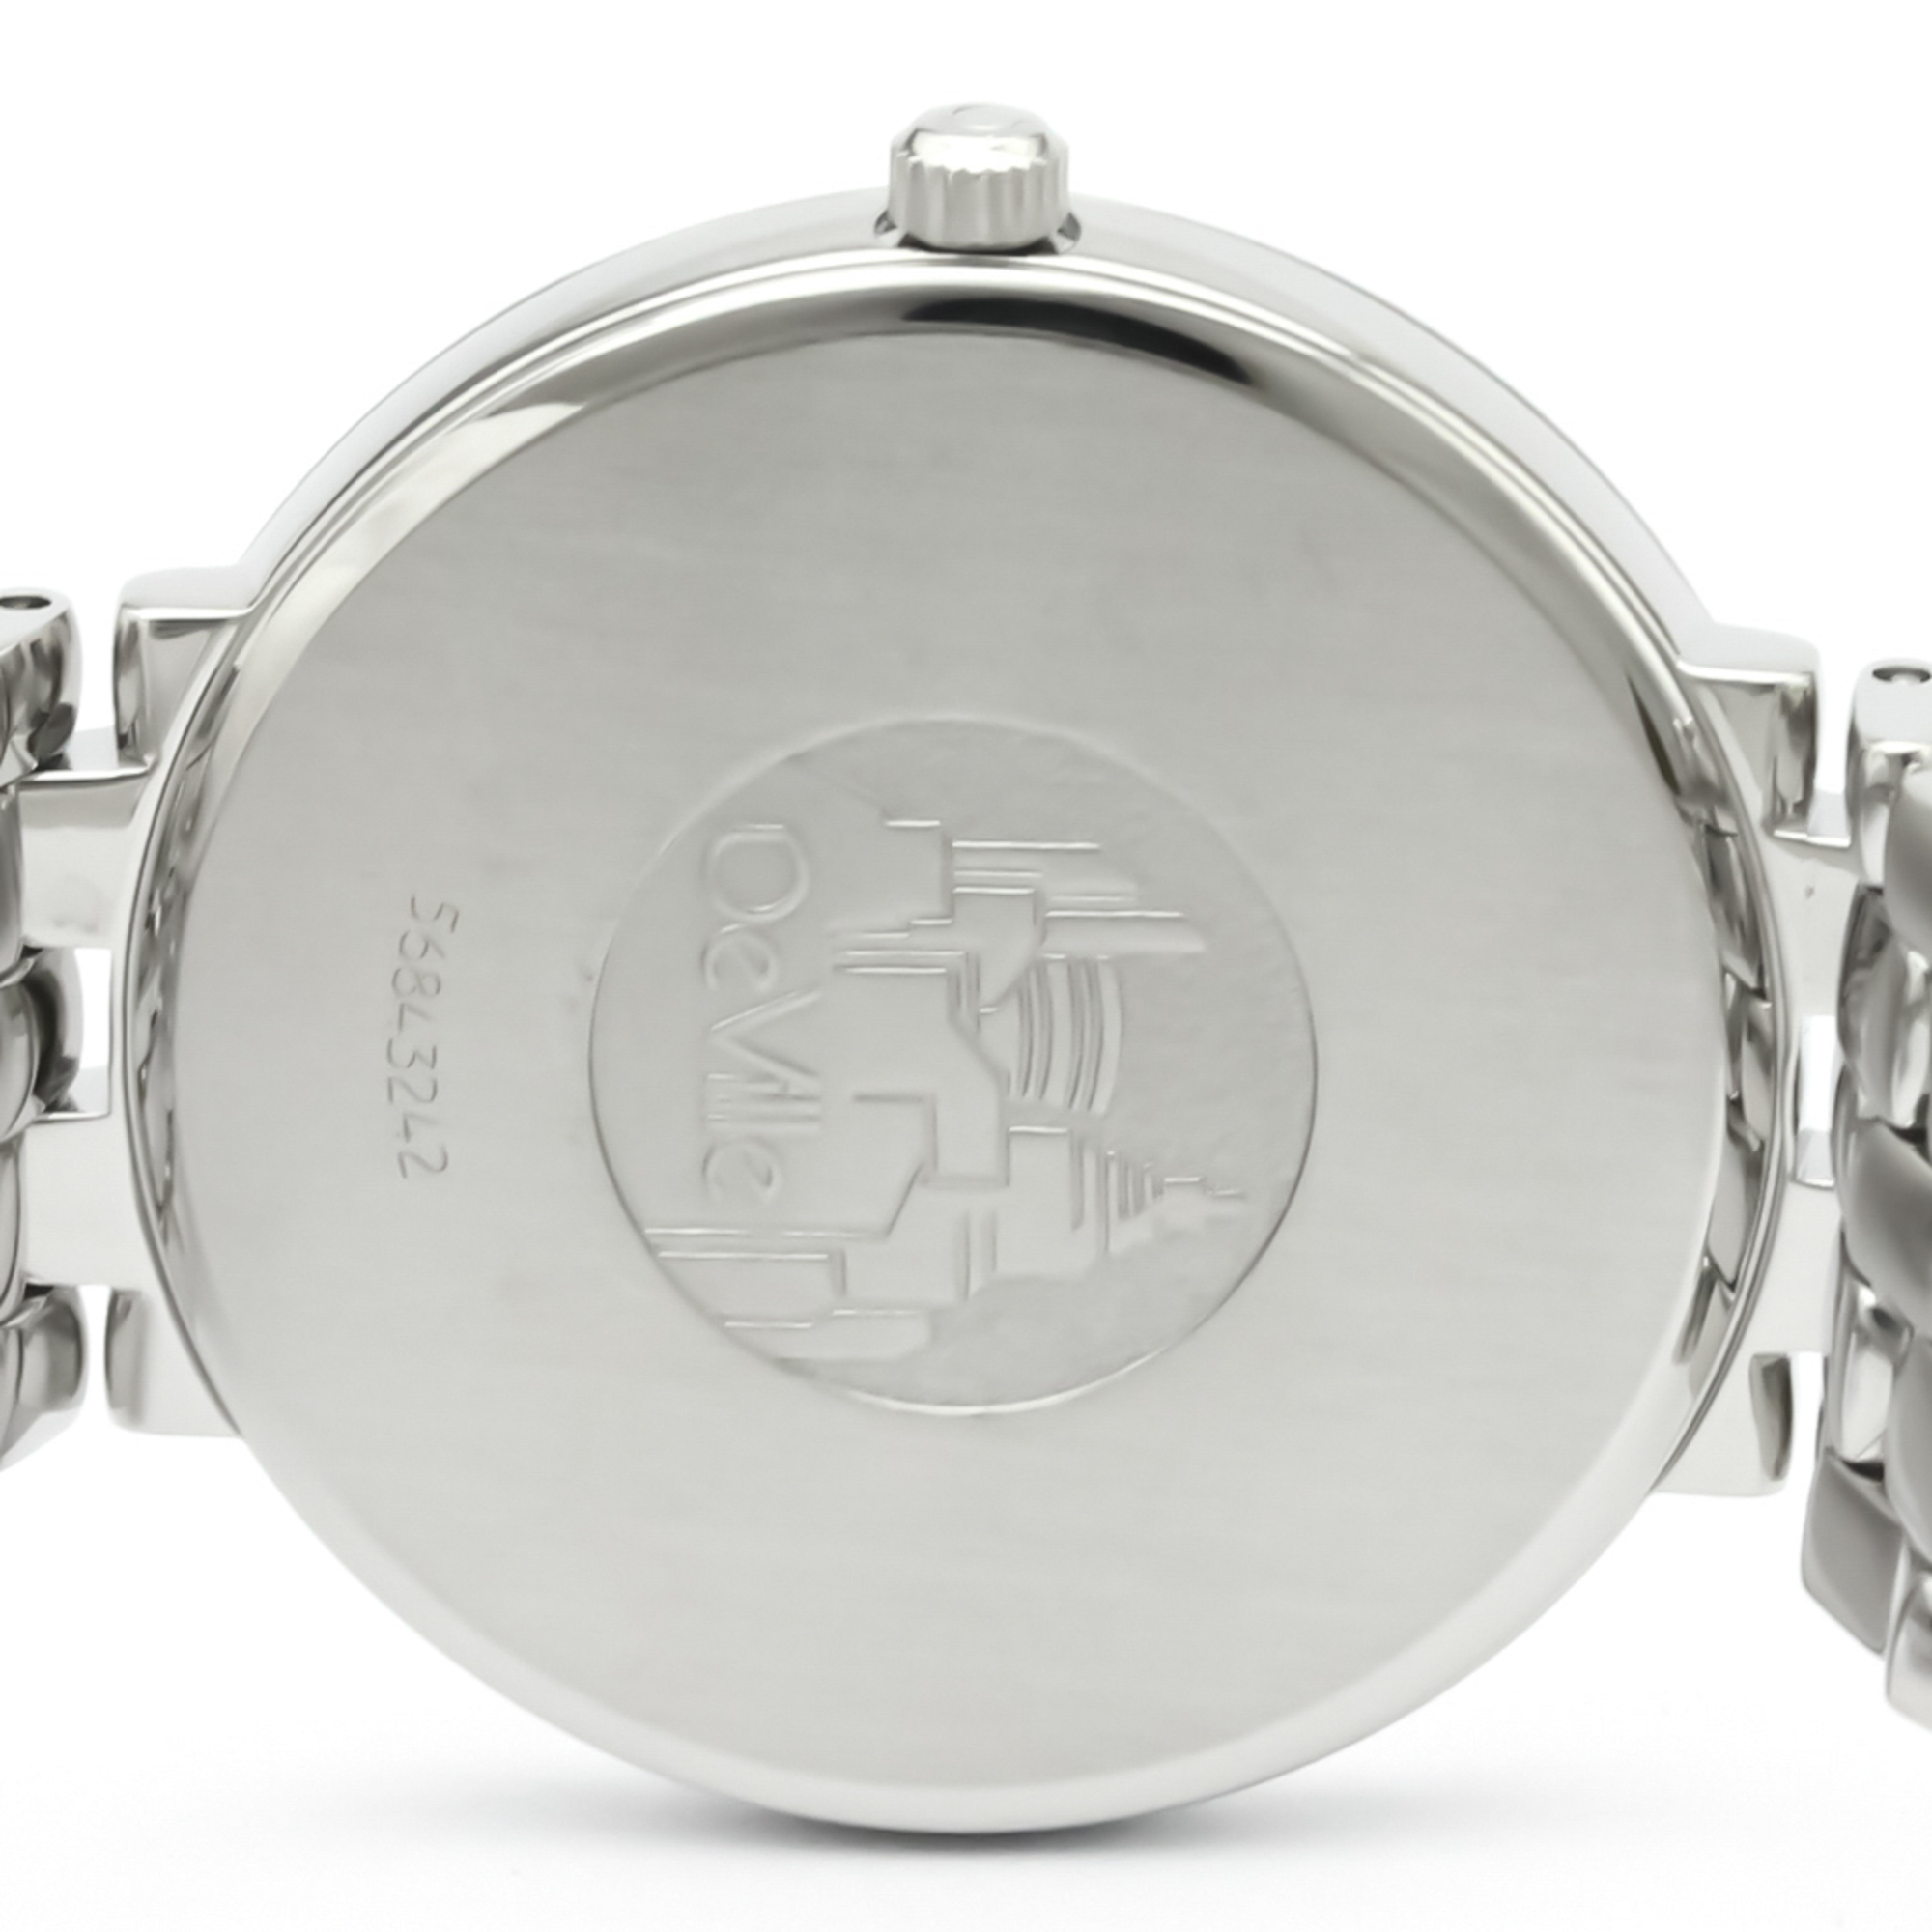 Omega De Ville Quartz Stainless Steel Men's Dress Watch 7514.31